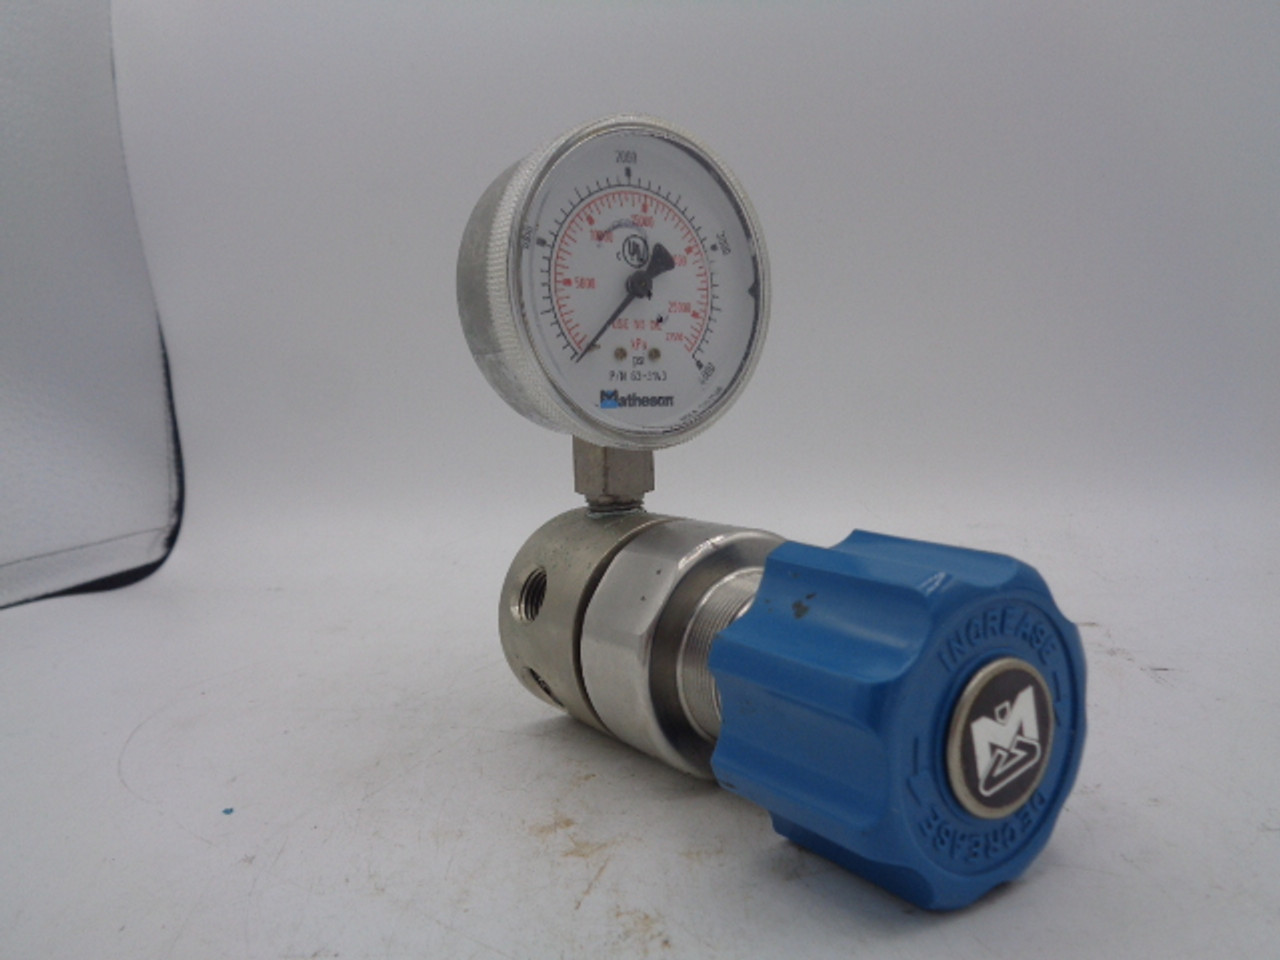 Matheson 01269797 Single Pressure Gauge Gas Regulator